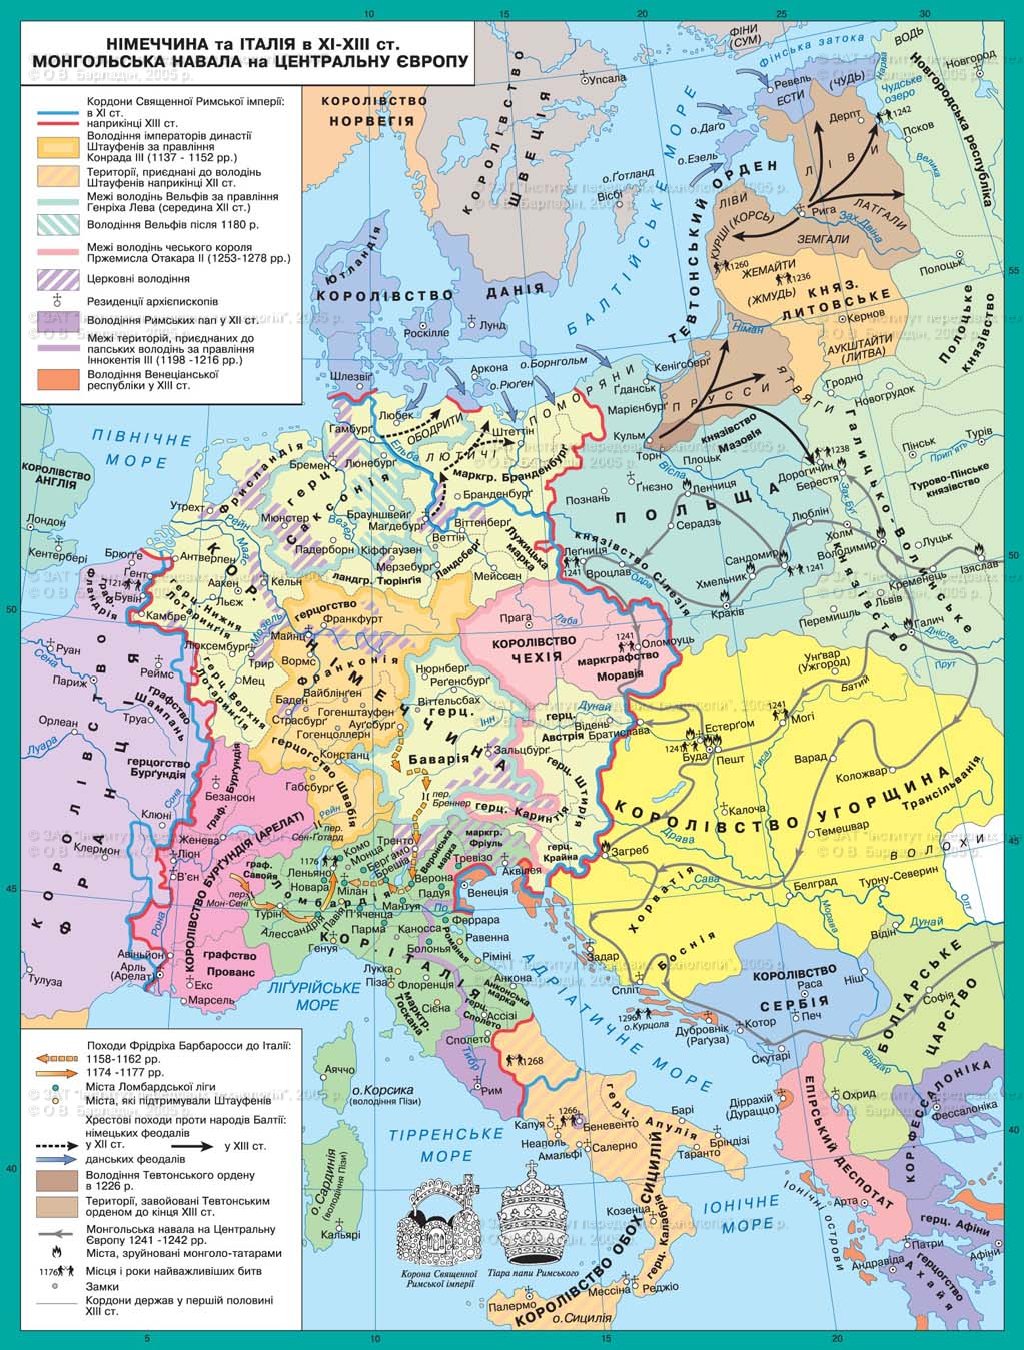 Европа 13 14 века. Карта Европы XII века. Карта Европы 13 века. Карта Европы 12-13 веков. Карта Европы XIII века.